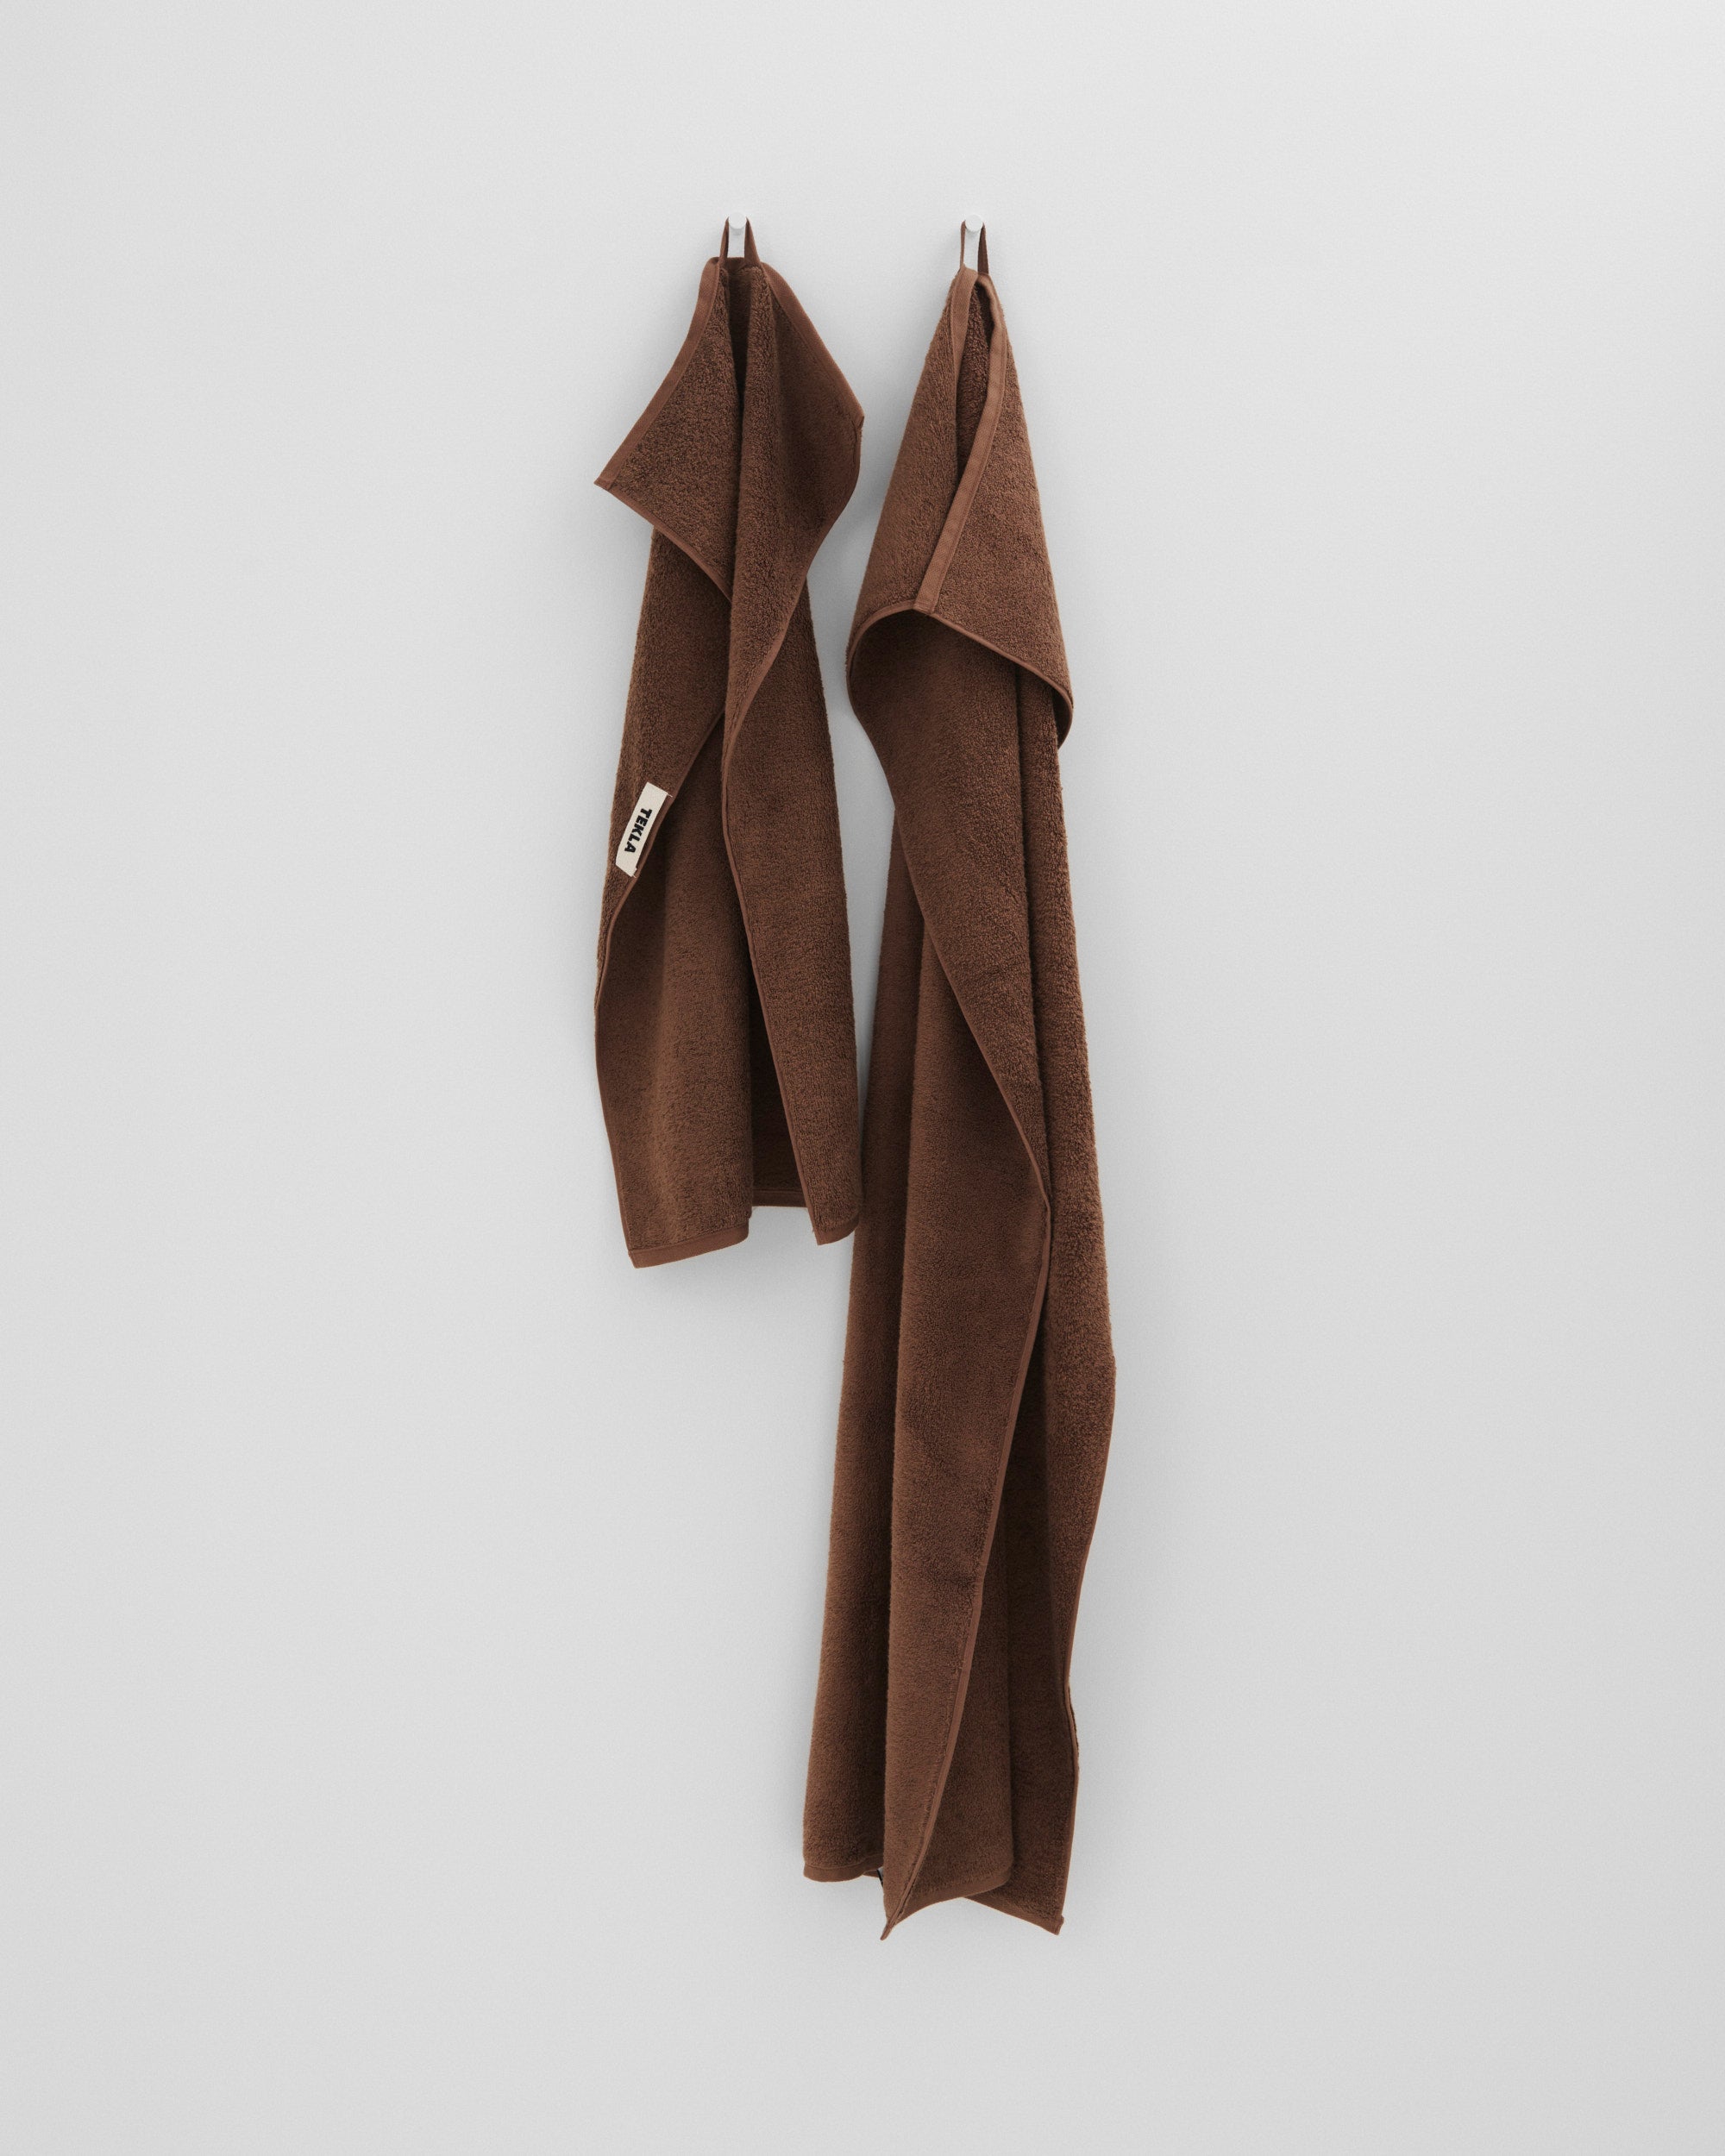 Kodiak Brown Towels - 4pc Set